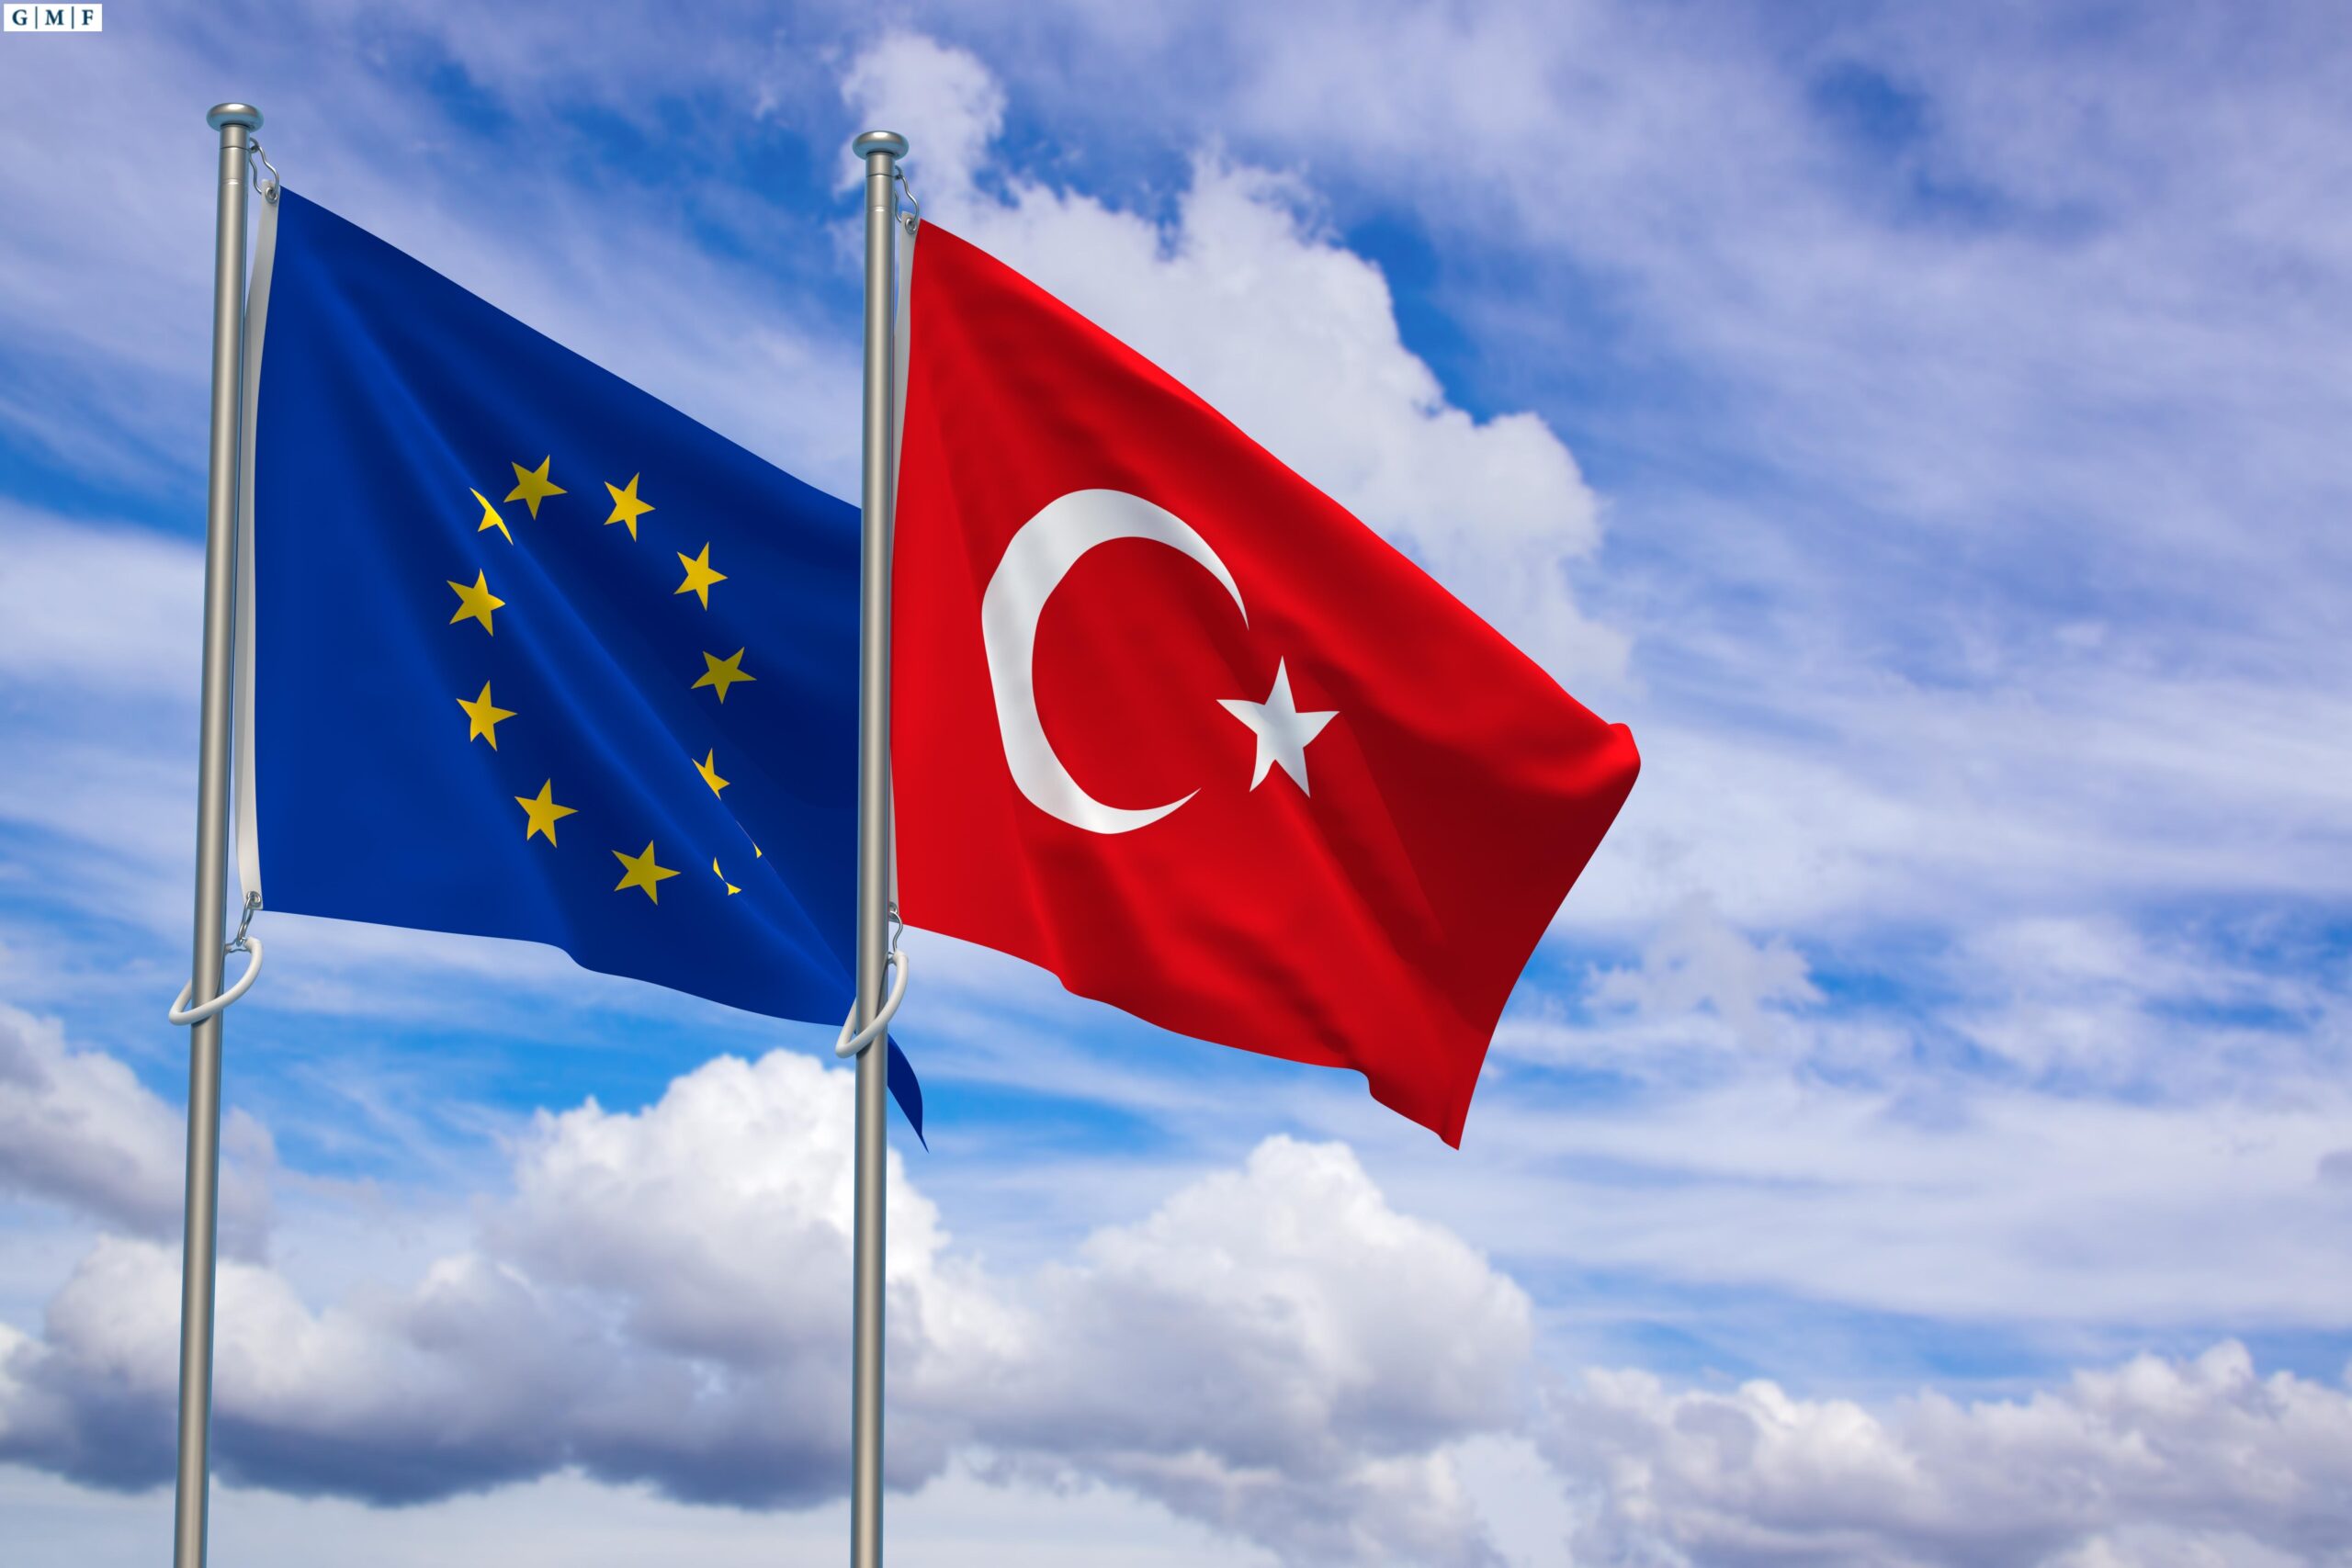 EU-Türkiye Relations: Current Status and Future Prospects - German Marshall Fund